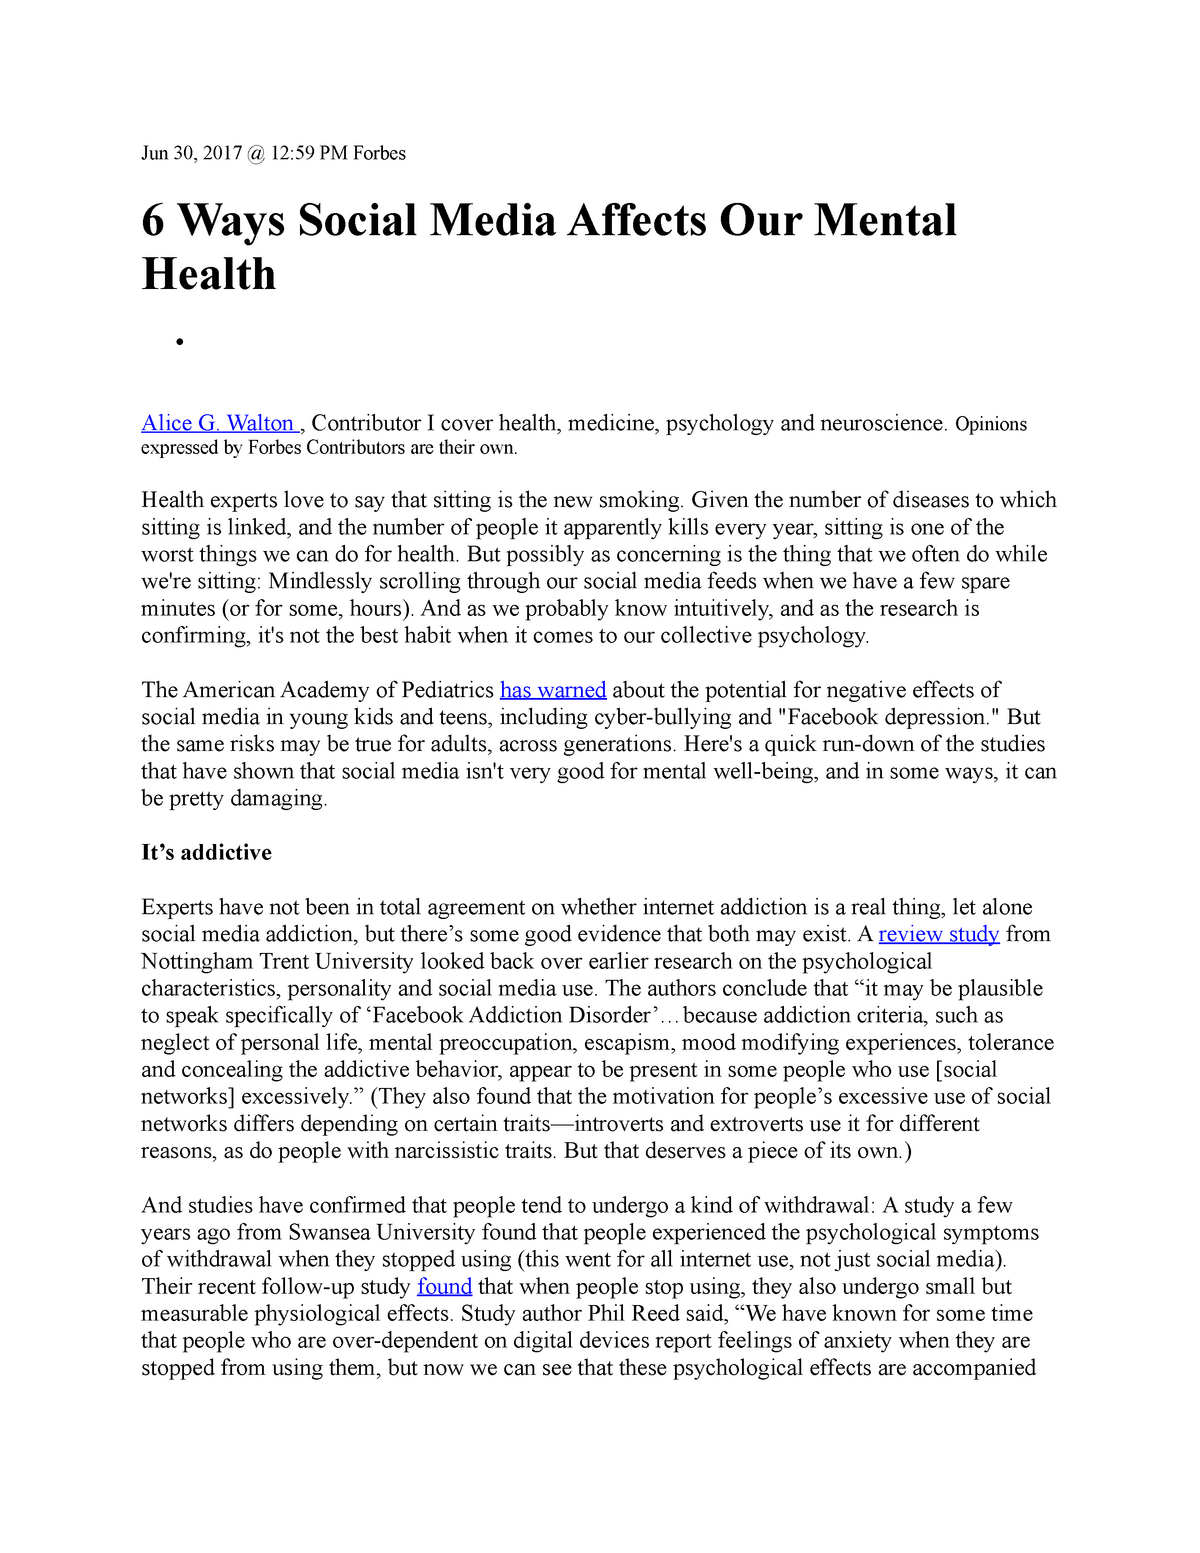 social media affect mental health essay